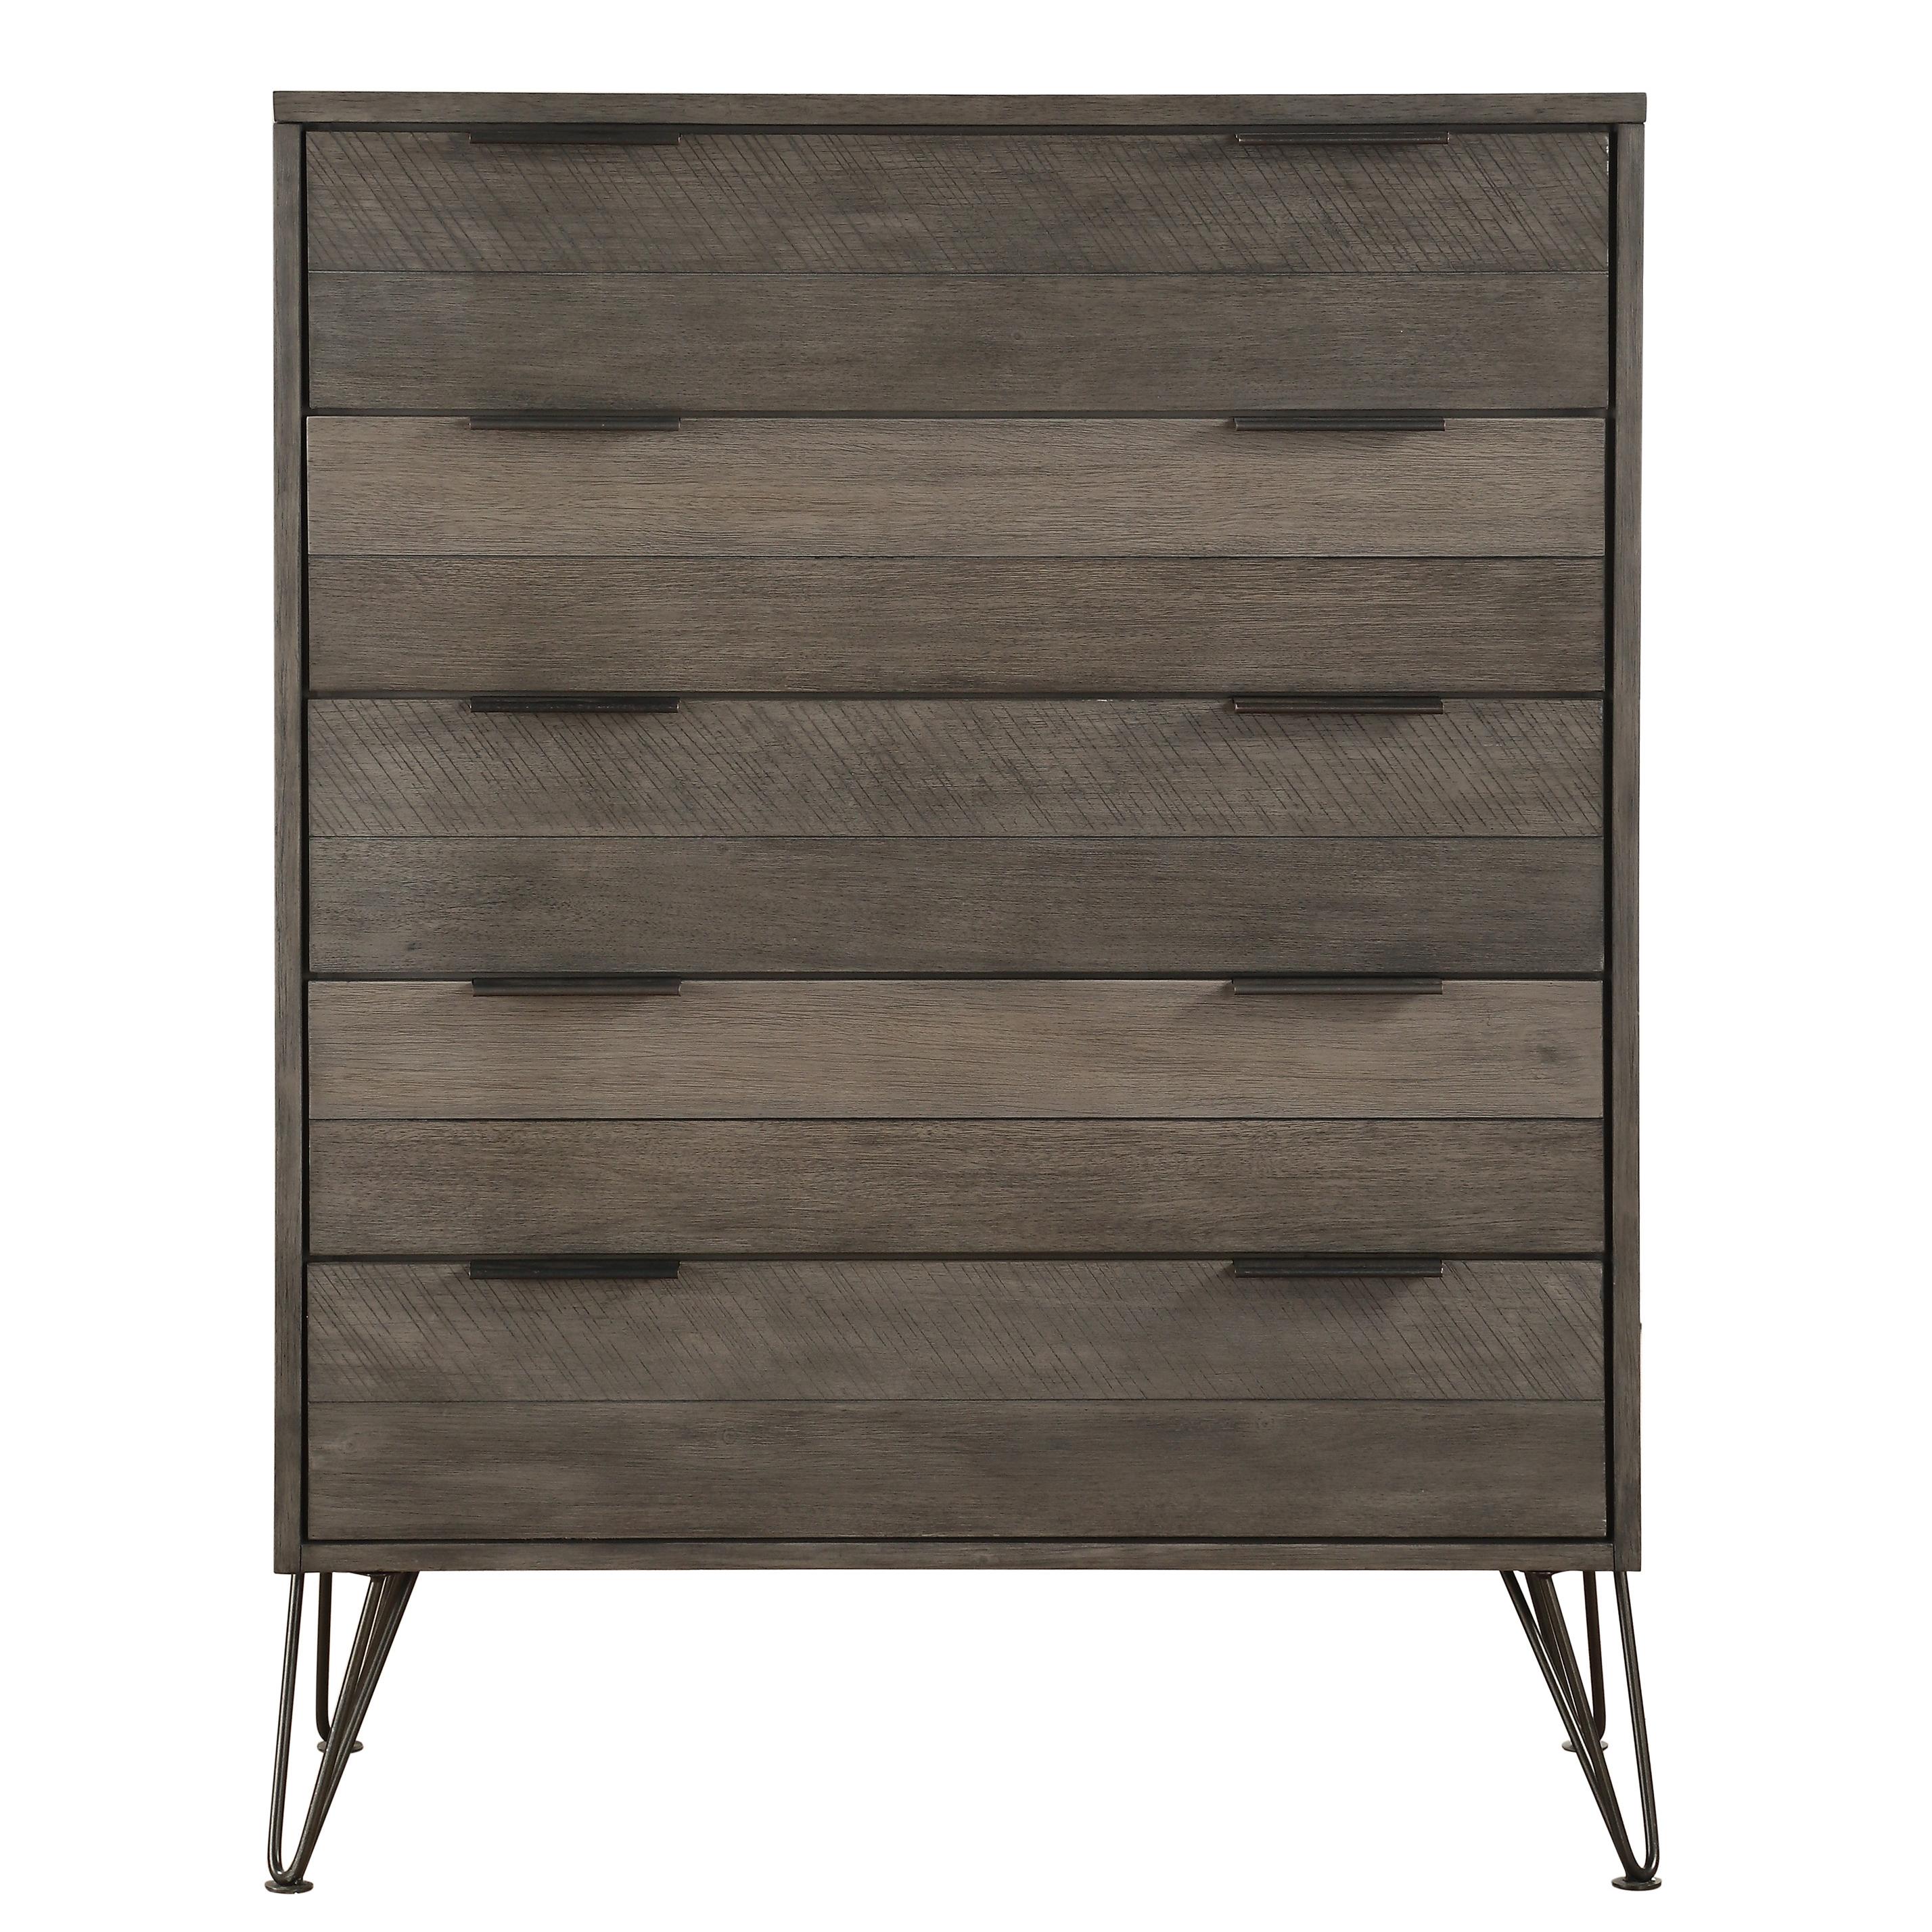 

    
Contemporary 3-Tone Gray Wood Full Bedroom Set 6pcs Homelegance 1604F-1* Urbanite
